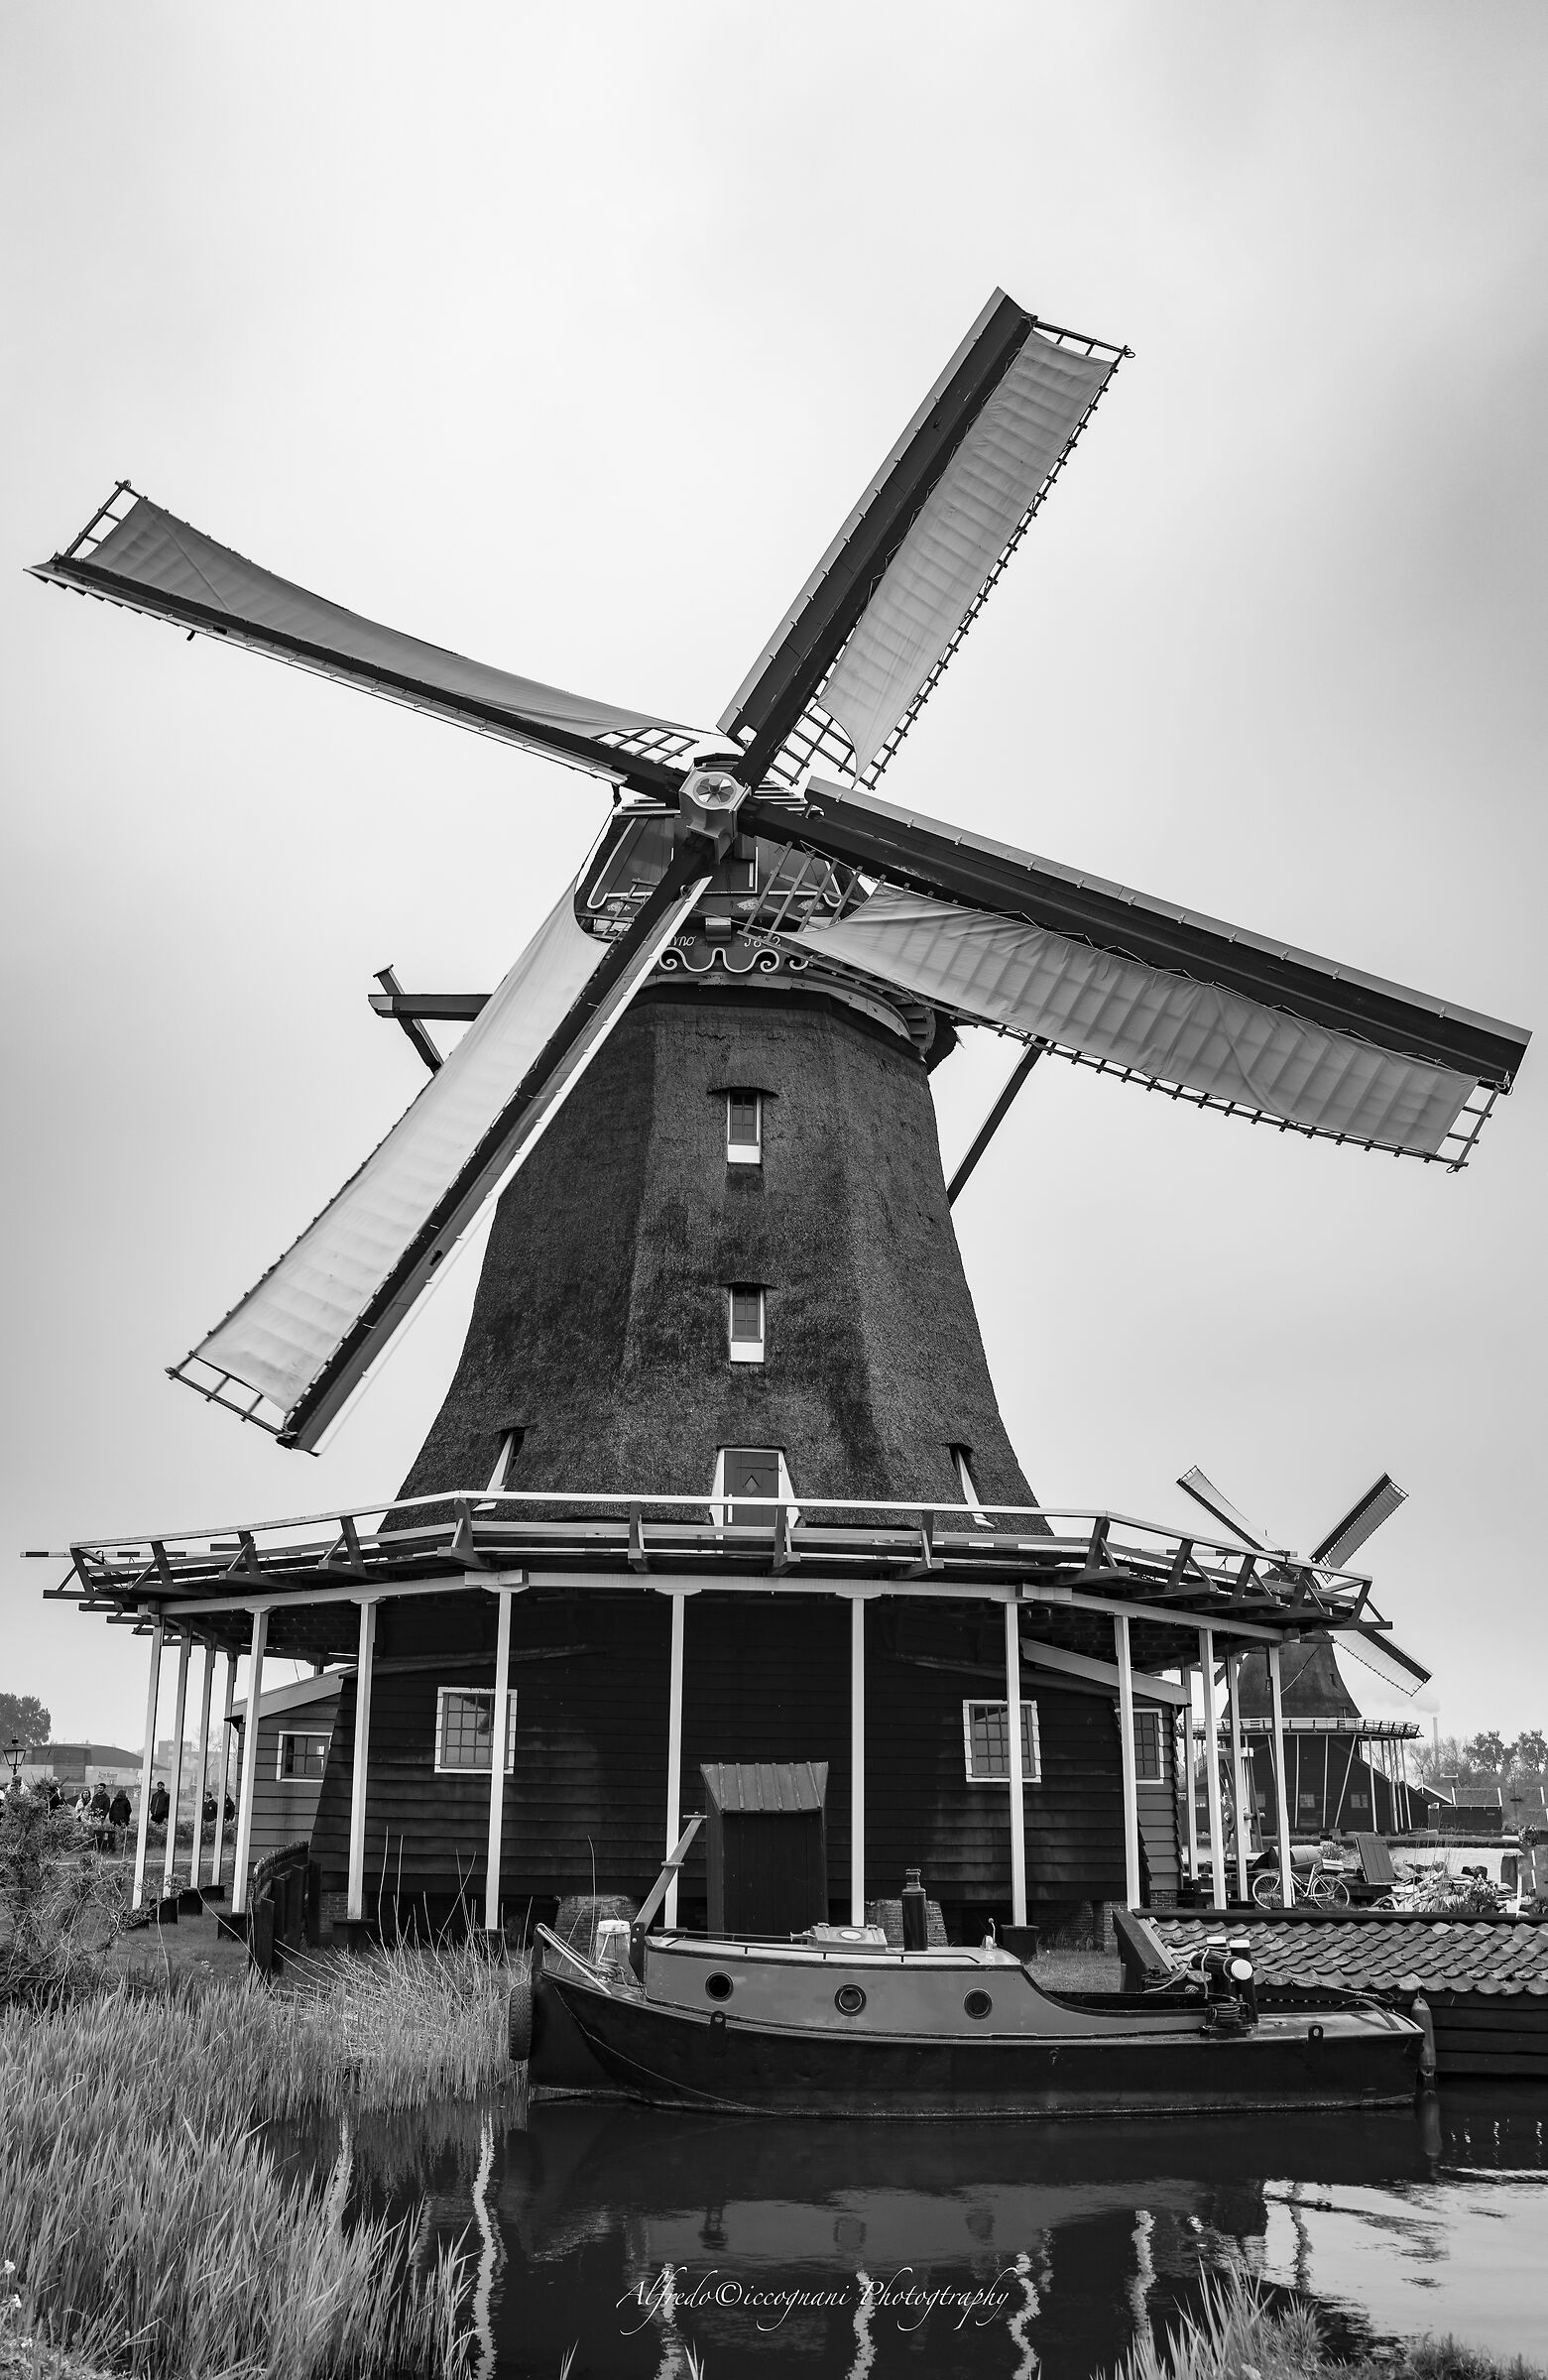 The mills of Zaanse Schans...